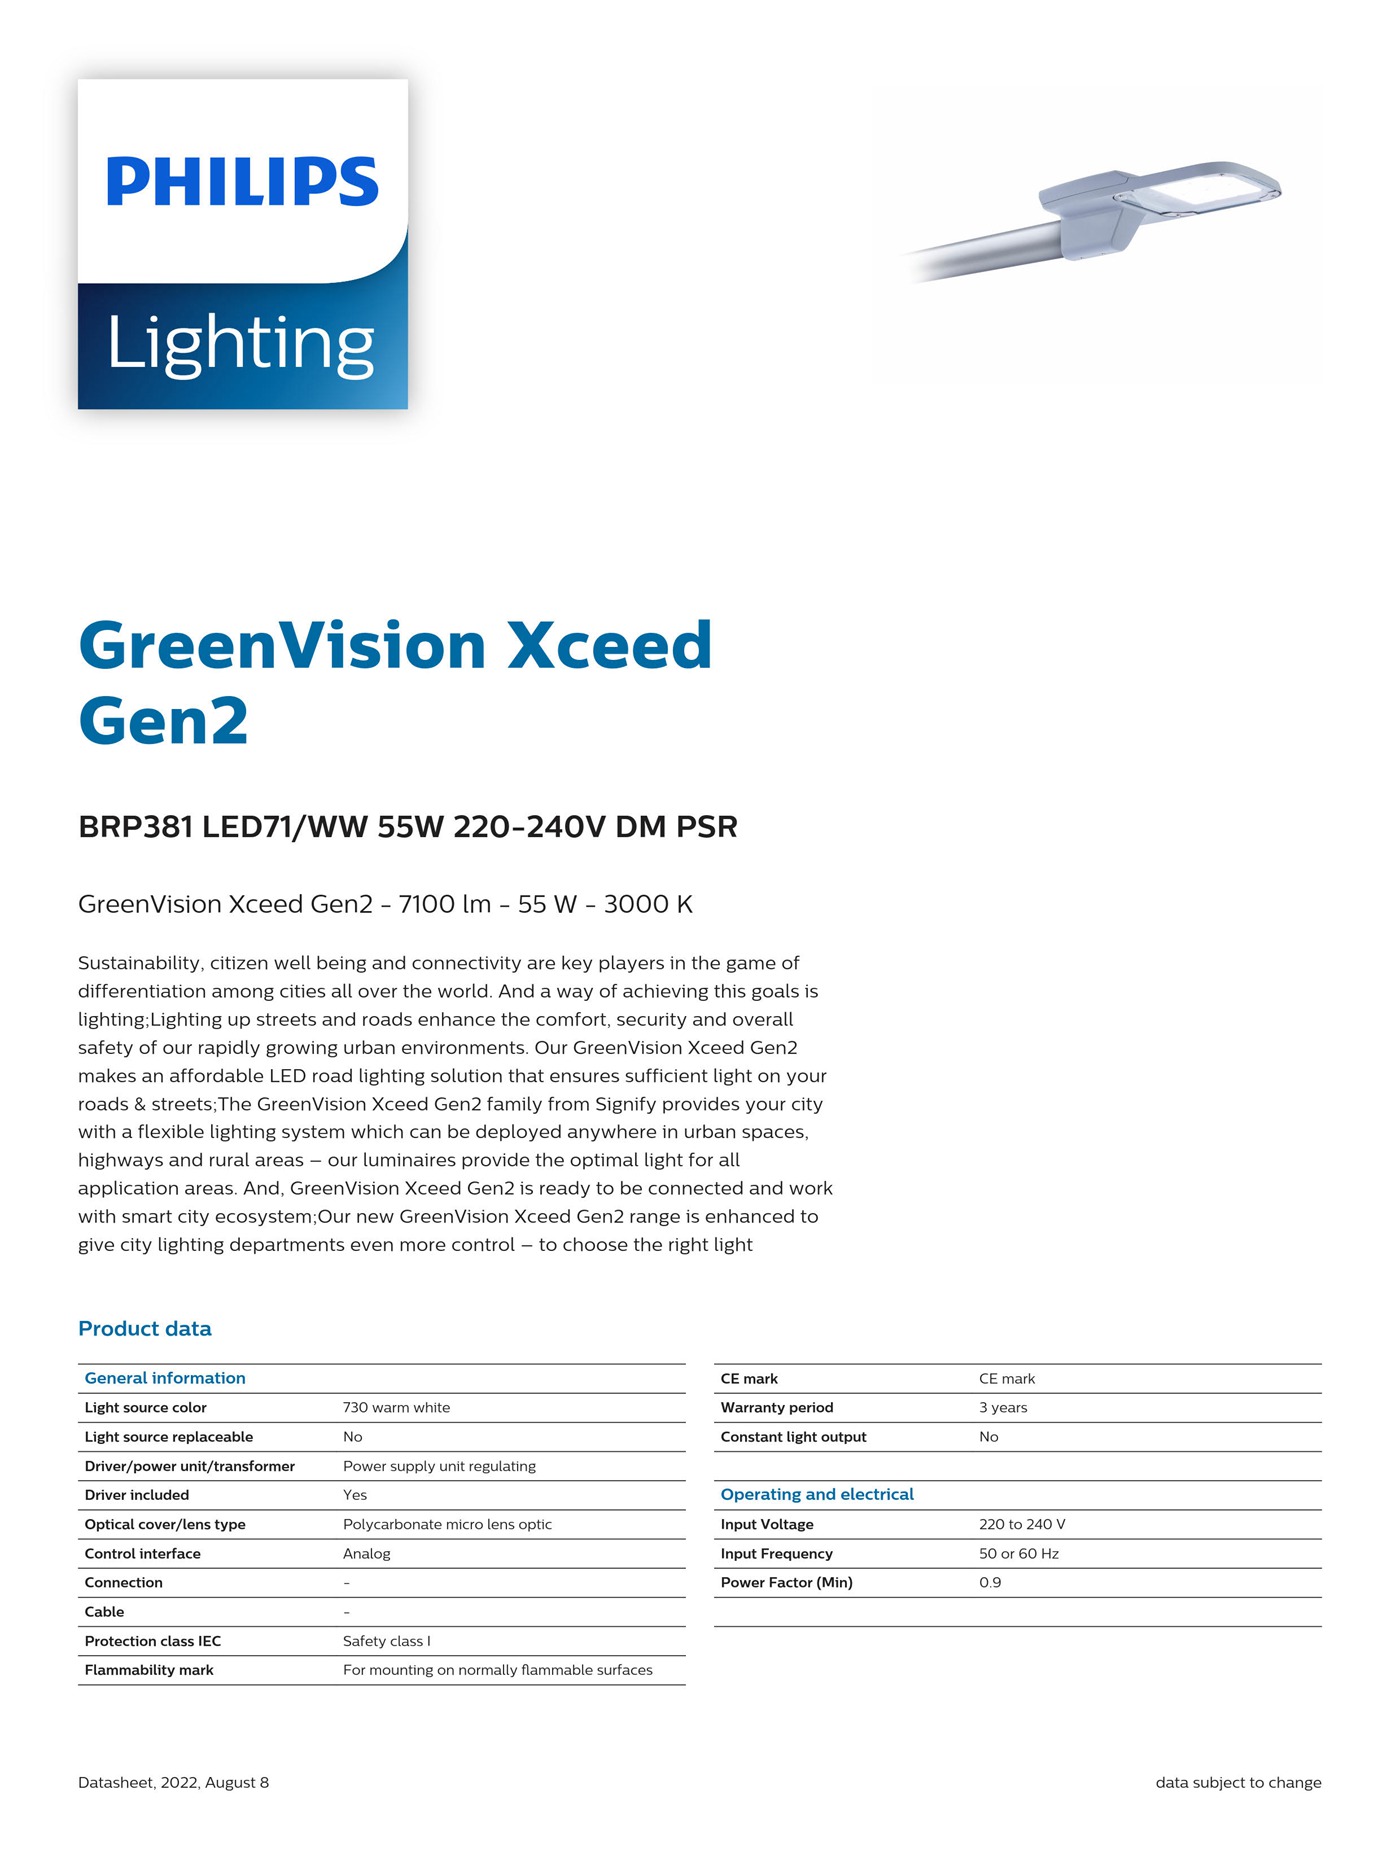 PHILIPS GreenVision Xceed Gen2 BRP381 LED71/WW 55W 220-240V DM PSR 911401878298